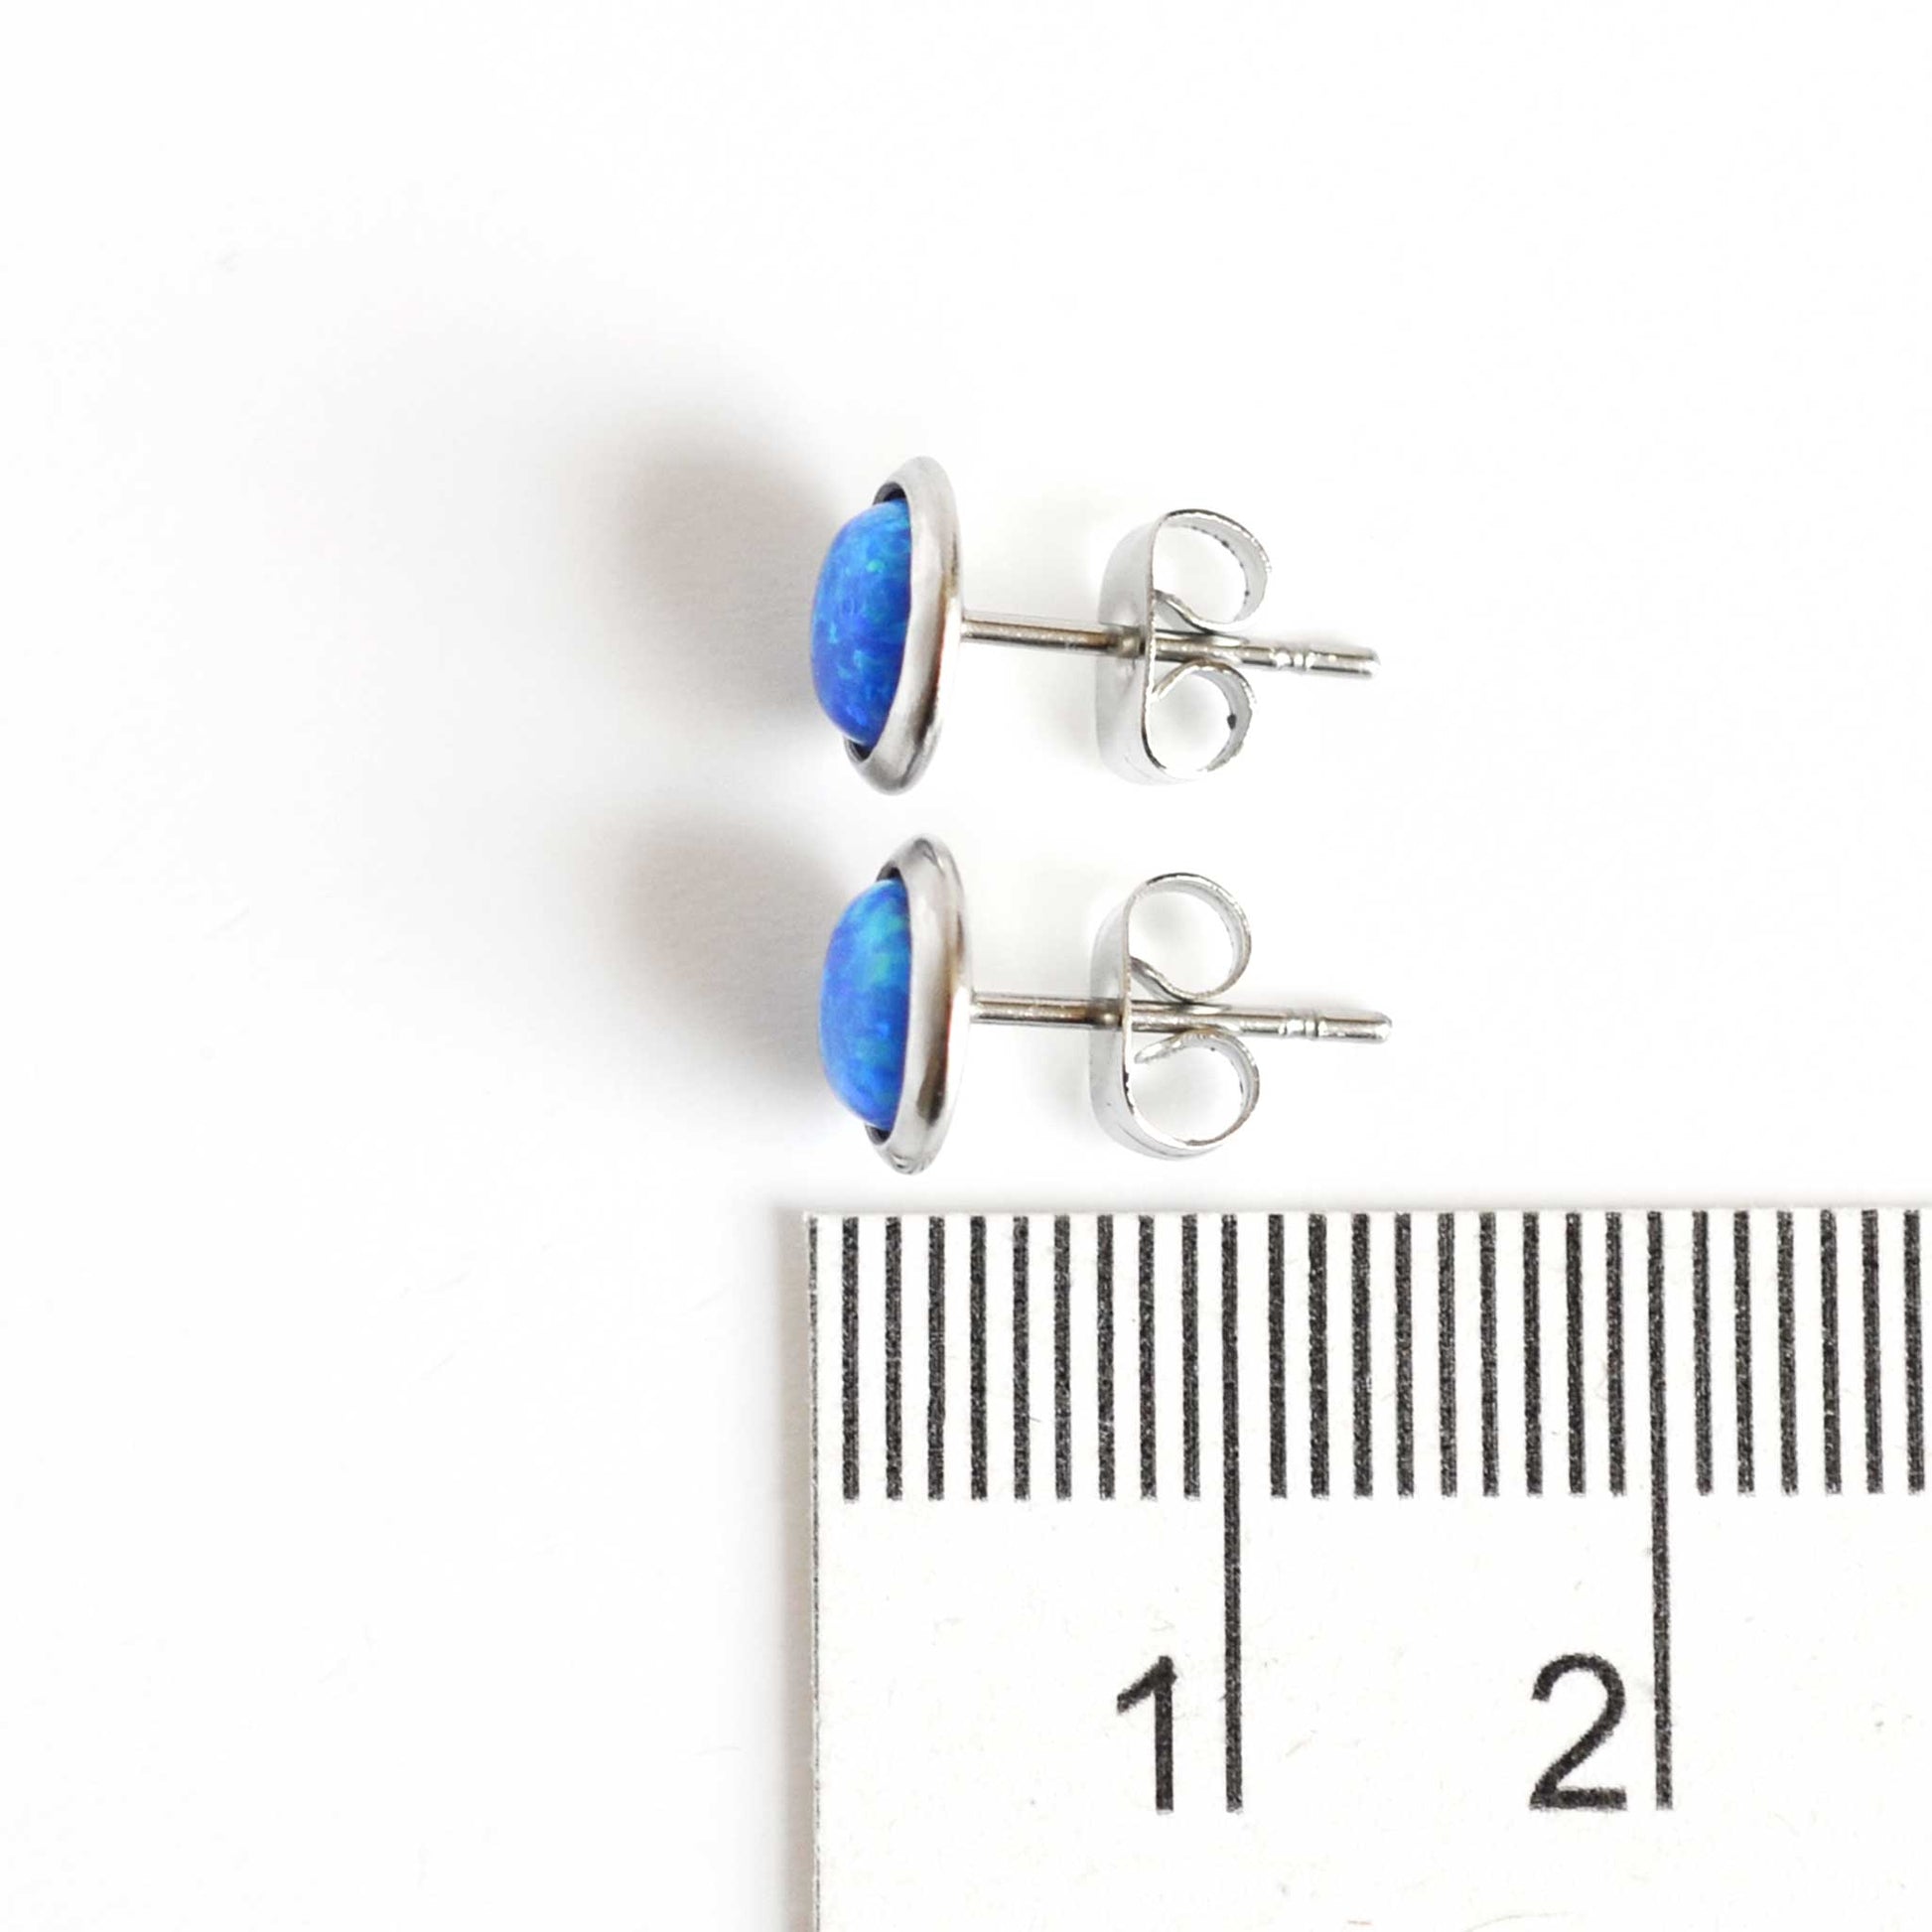 8mm blue Opal earrings next to ruler